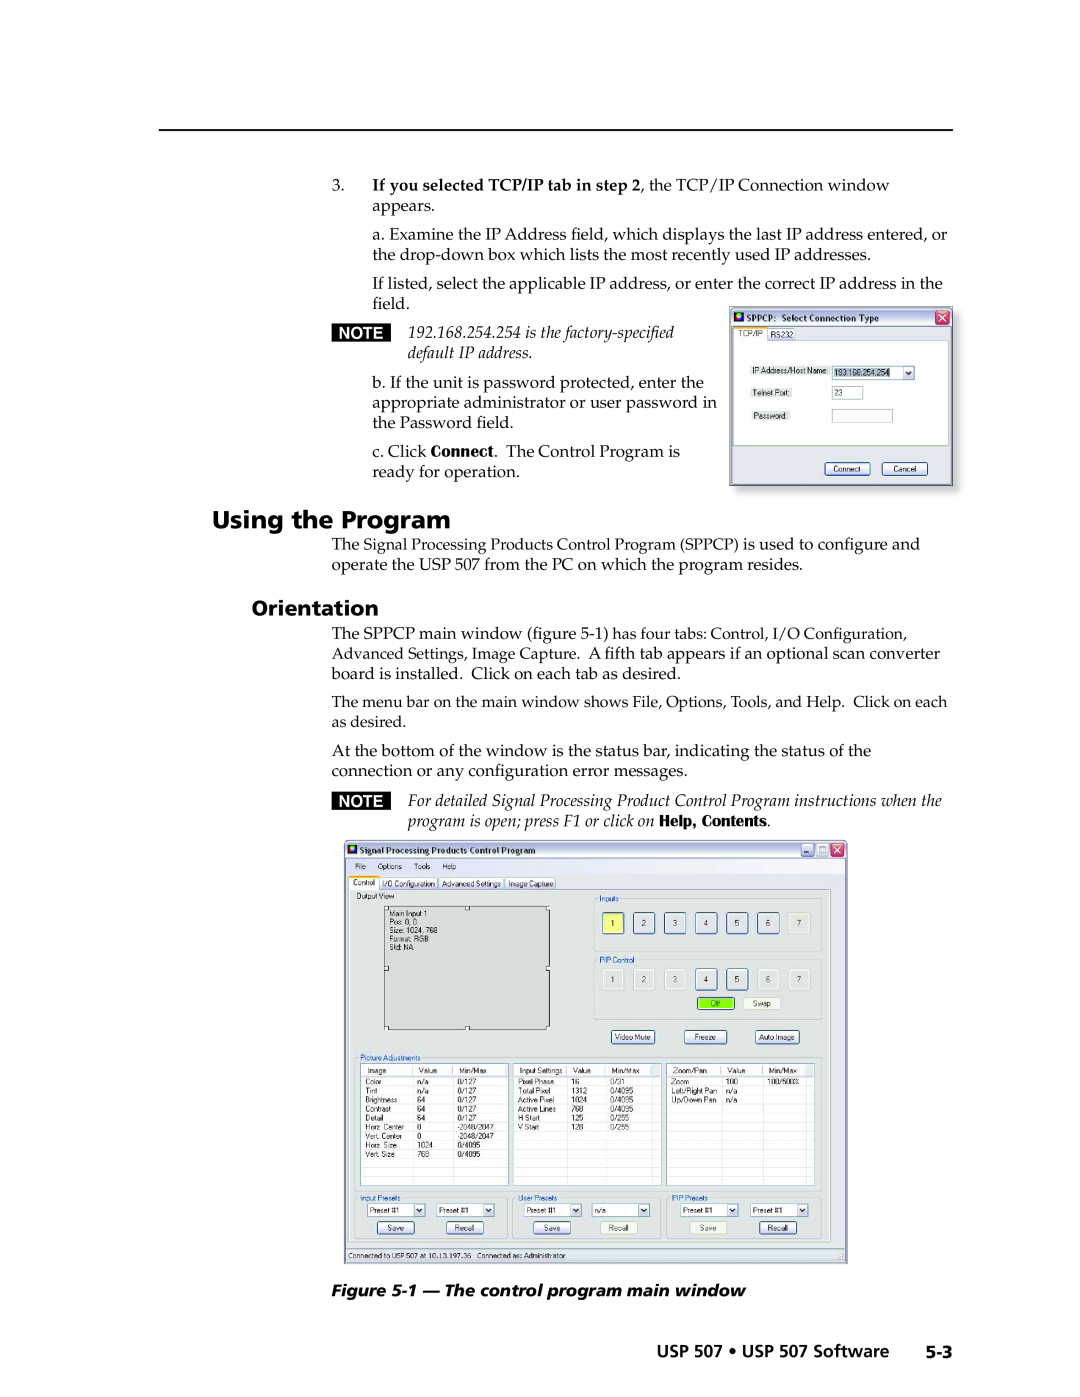 Extron electronic manual Using the Program, Orientation, 1— The control program main window, USP 507 USP 507 Software 